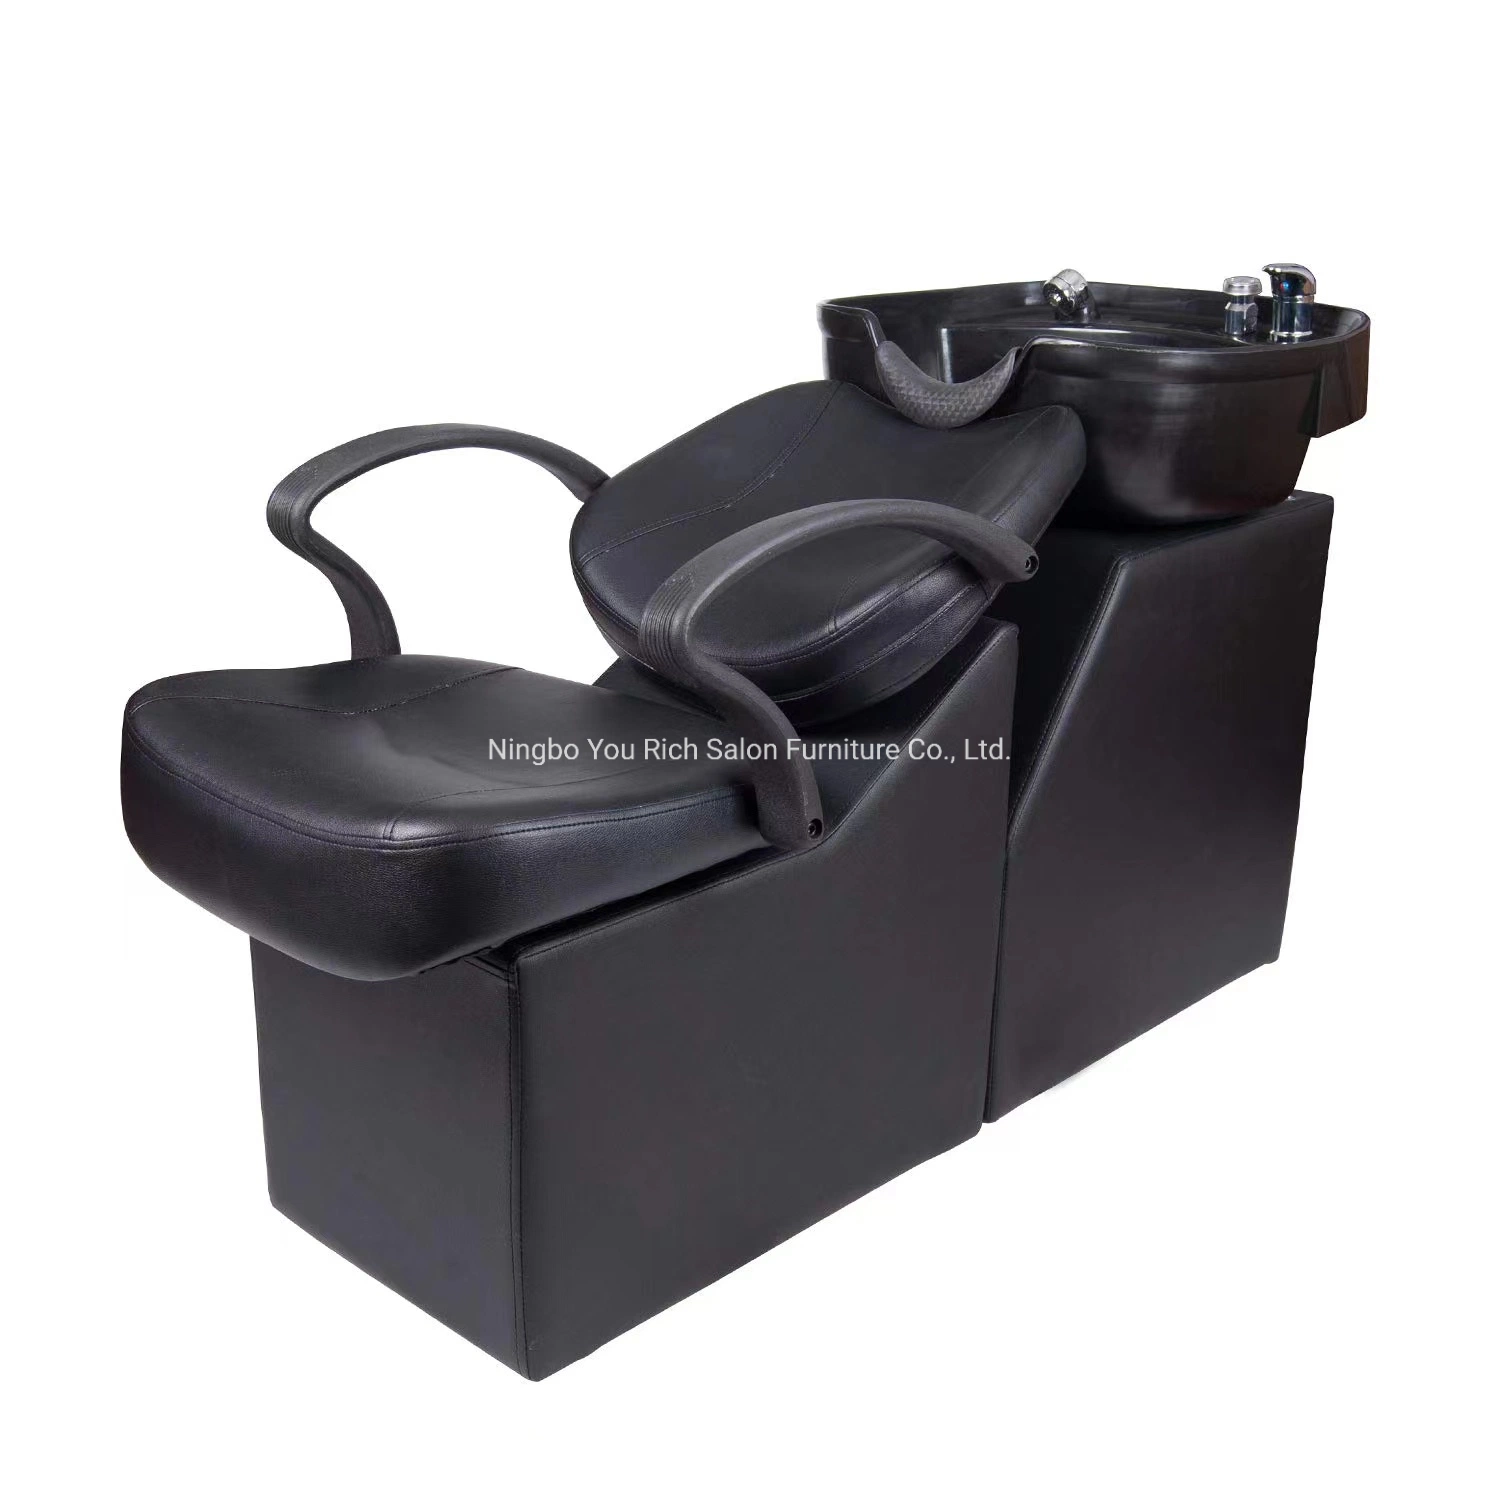 New Backwash Barber Chair ABS Plastic Shampoo Chair Bowl Sink